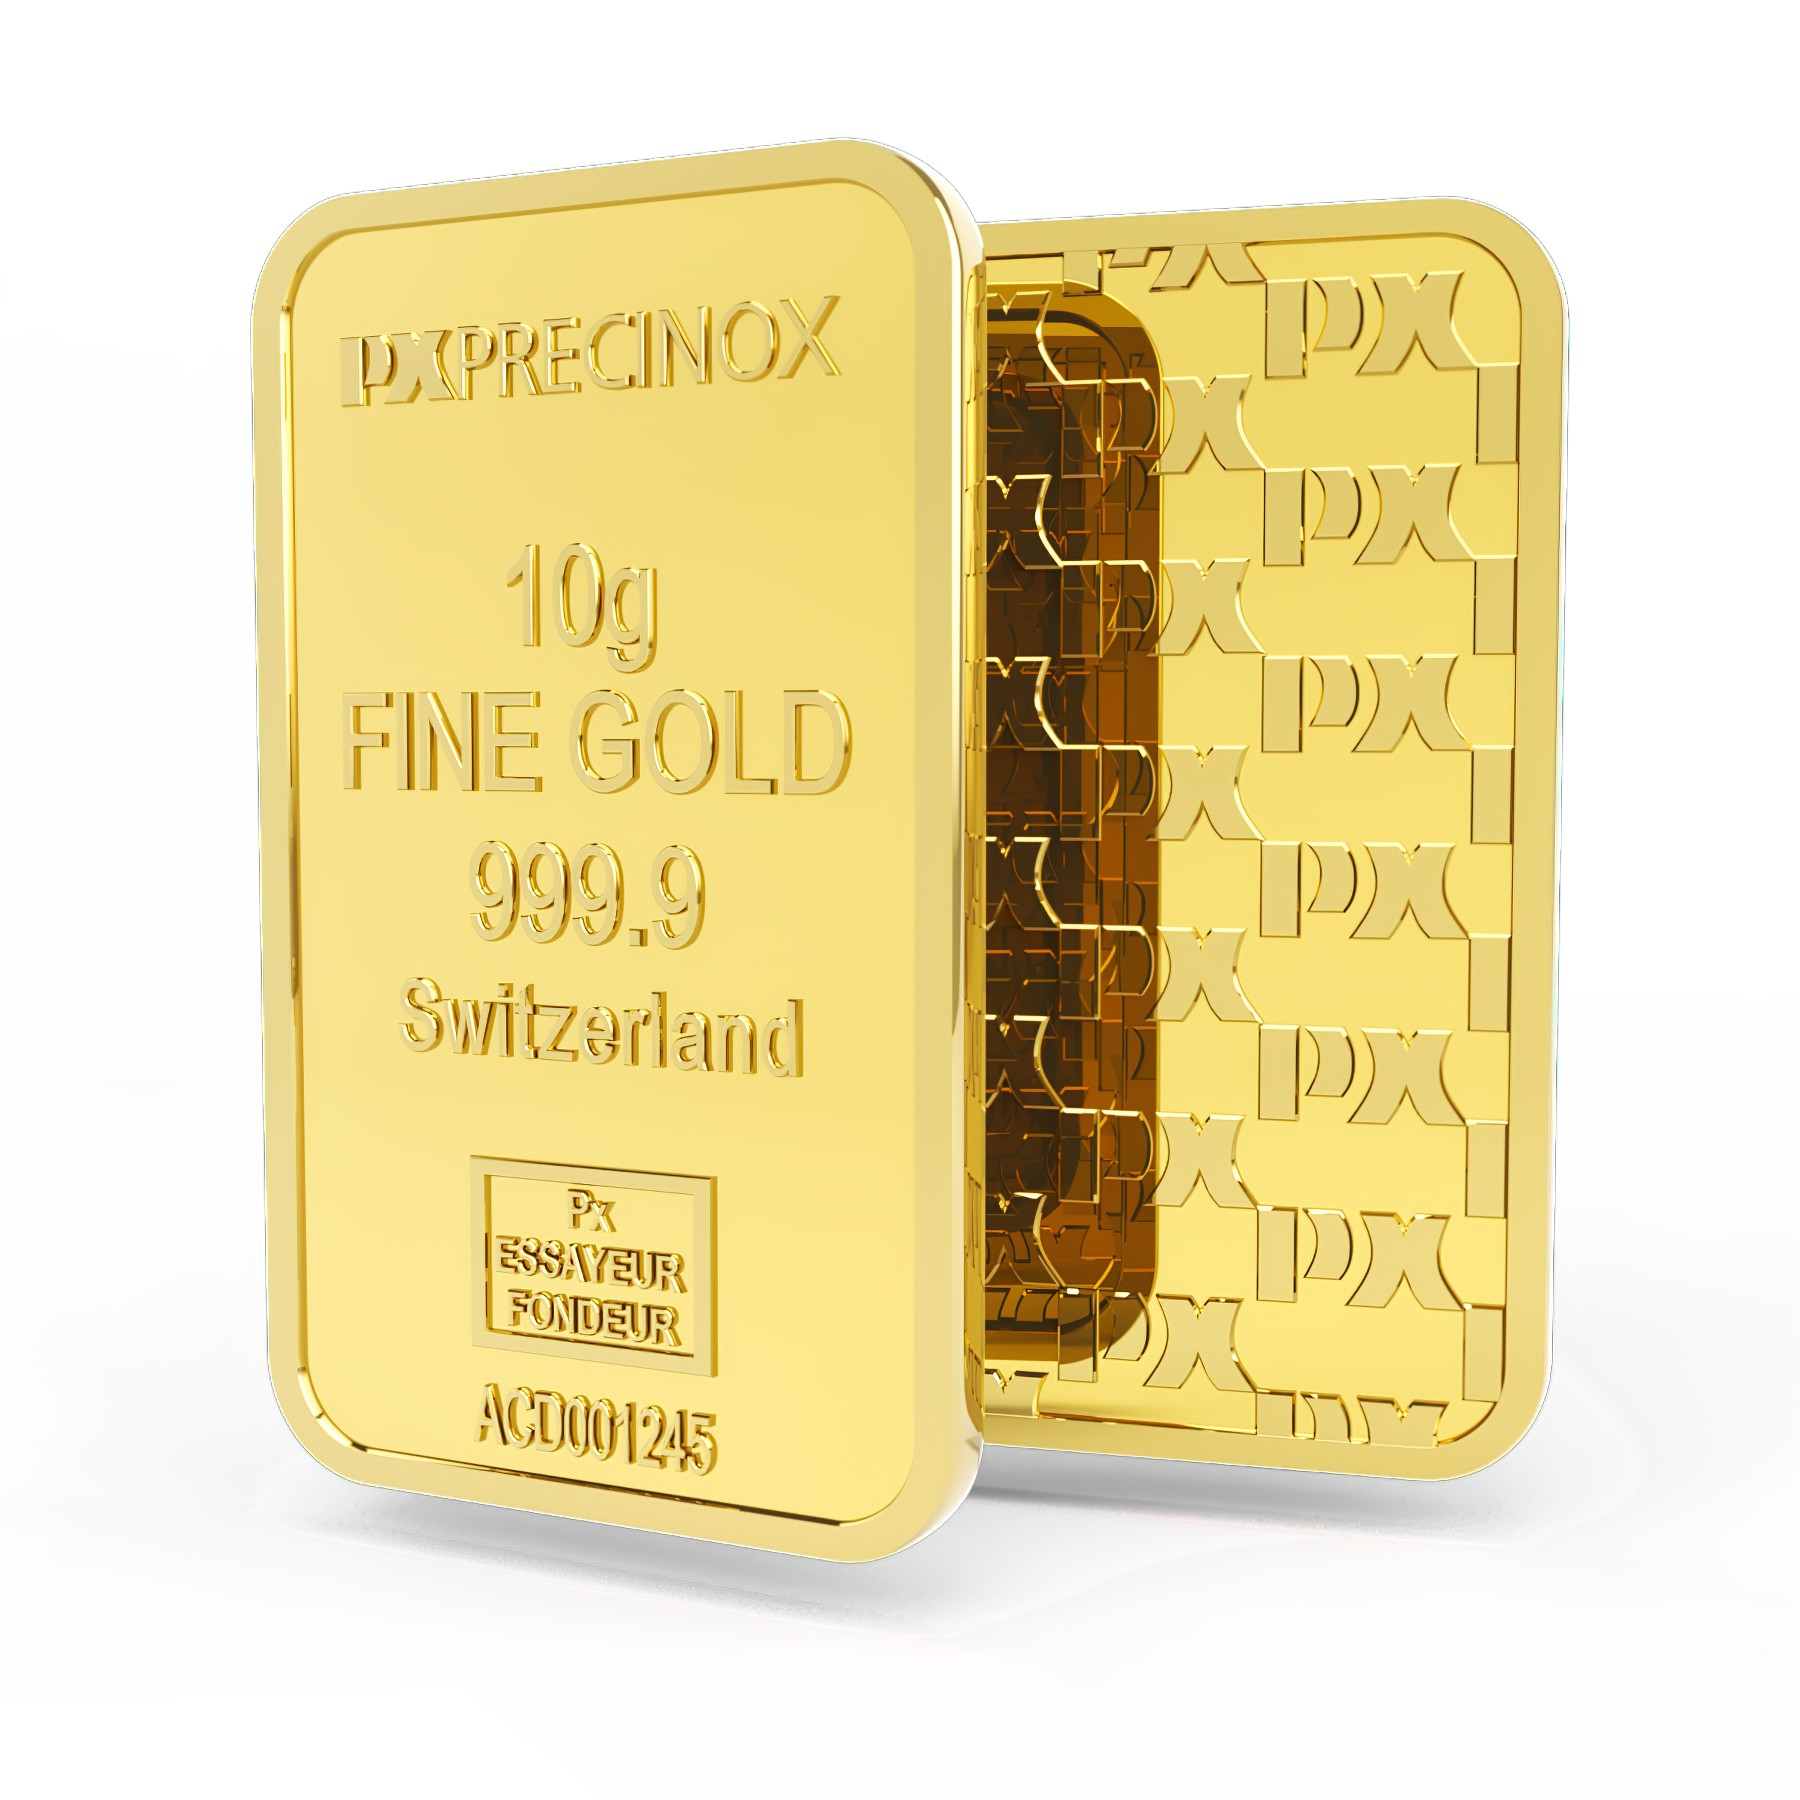 Aranyrúd 10gr, Svájc, Fine Gold 999,9